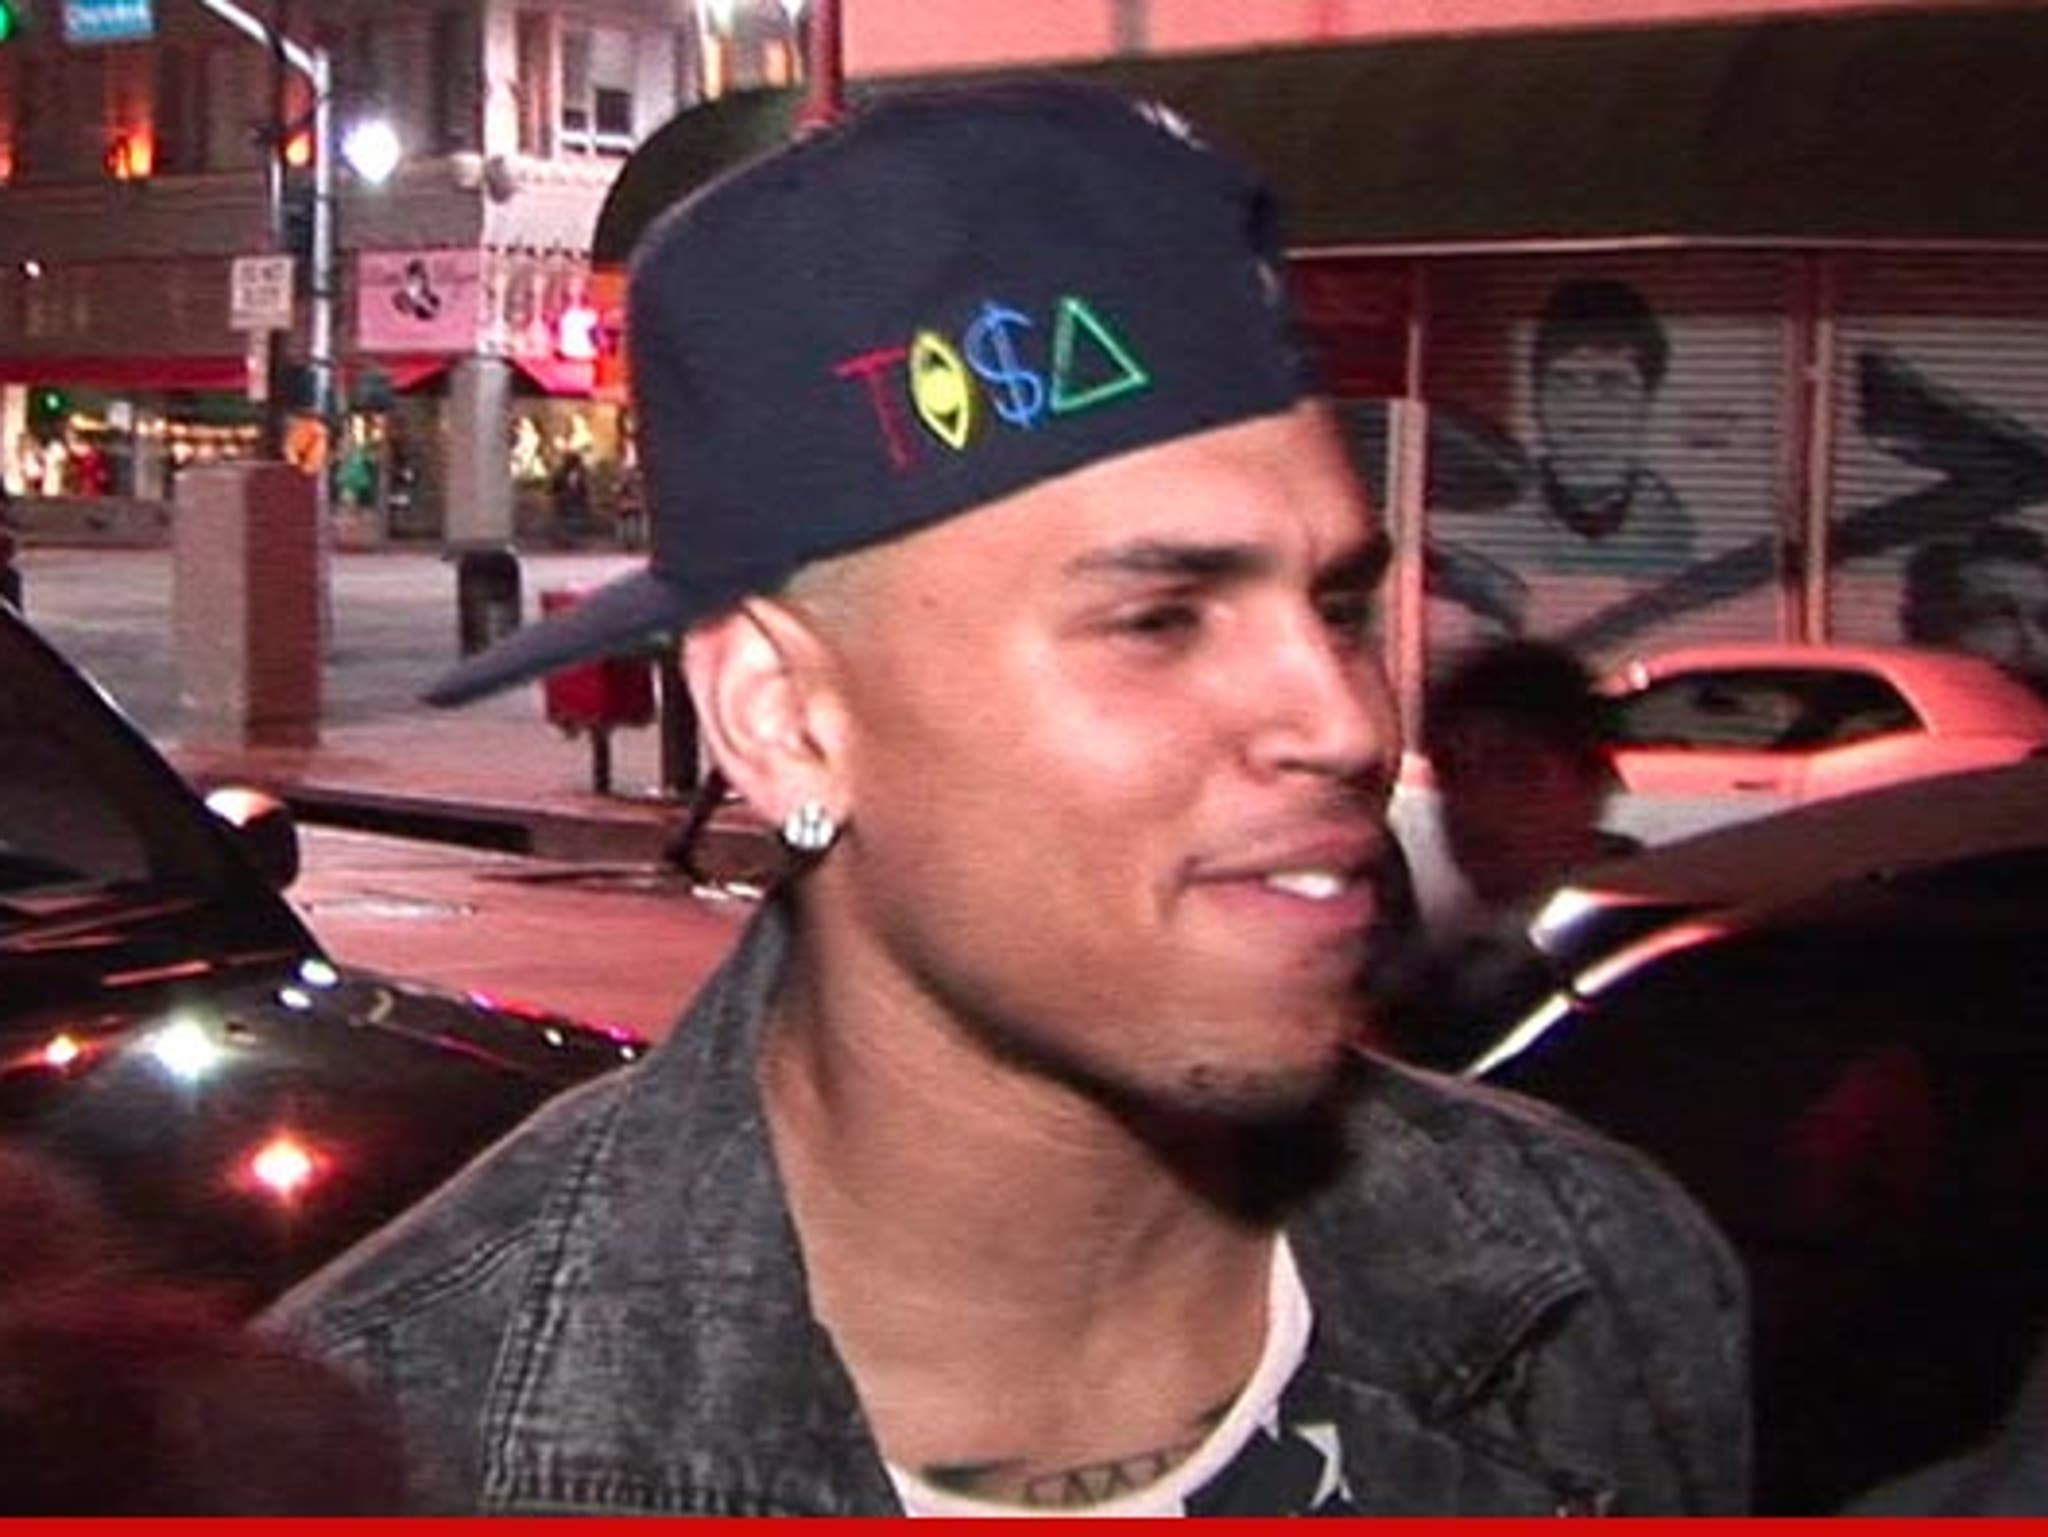 Chris Brown spotted last night in LA 📸